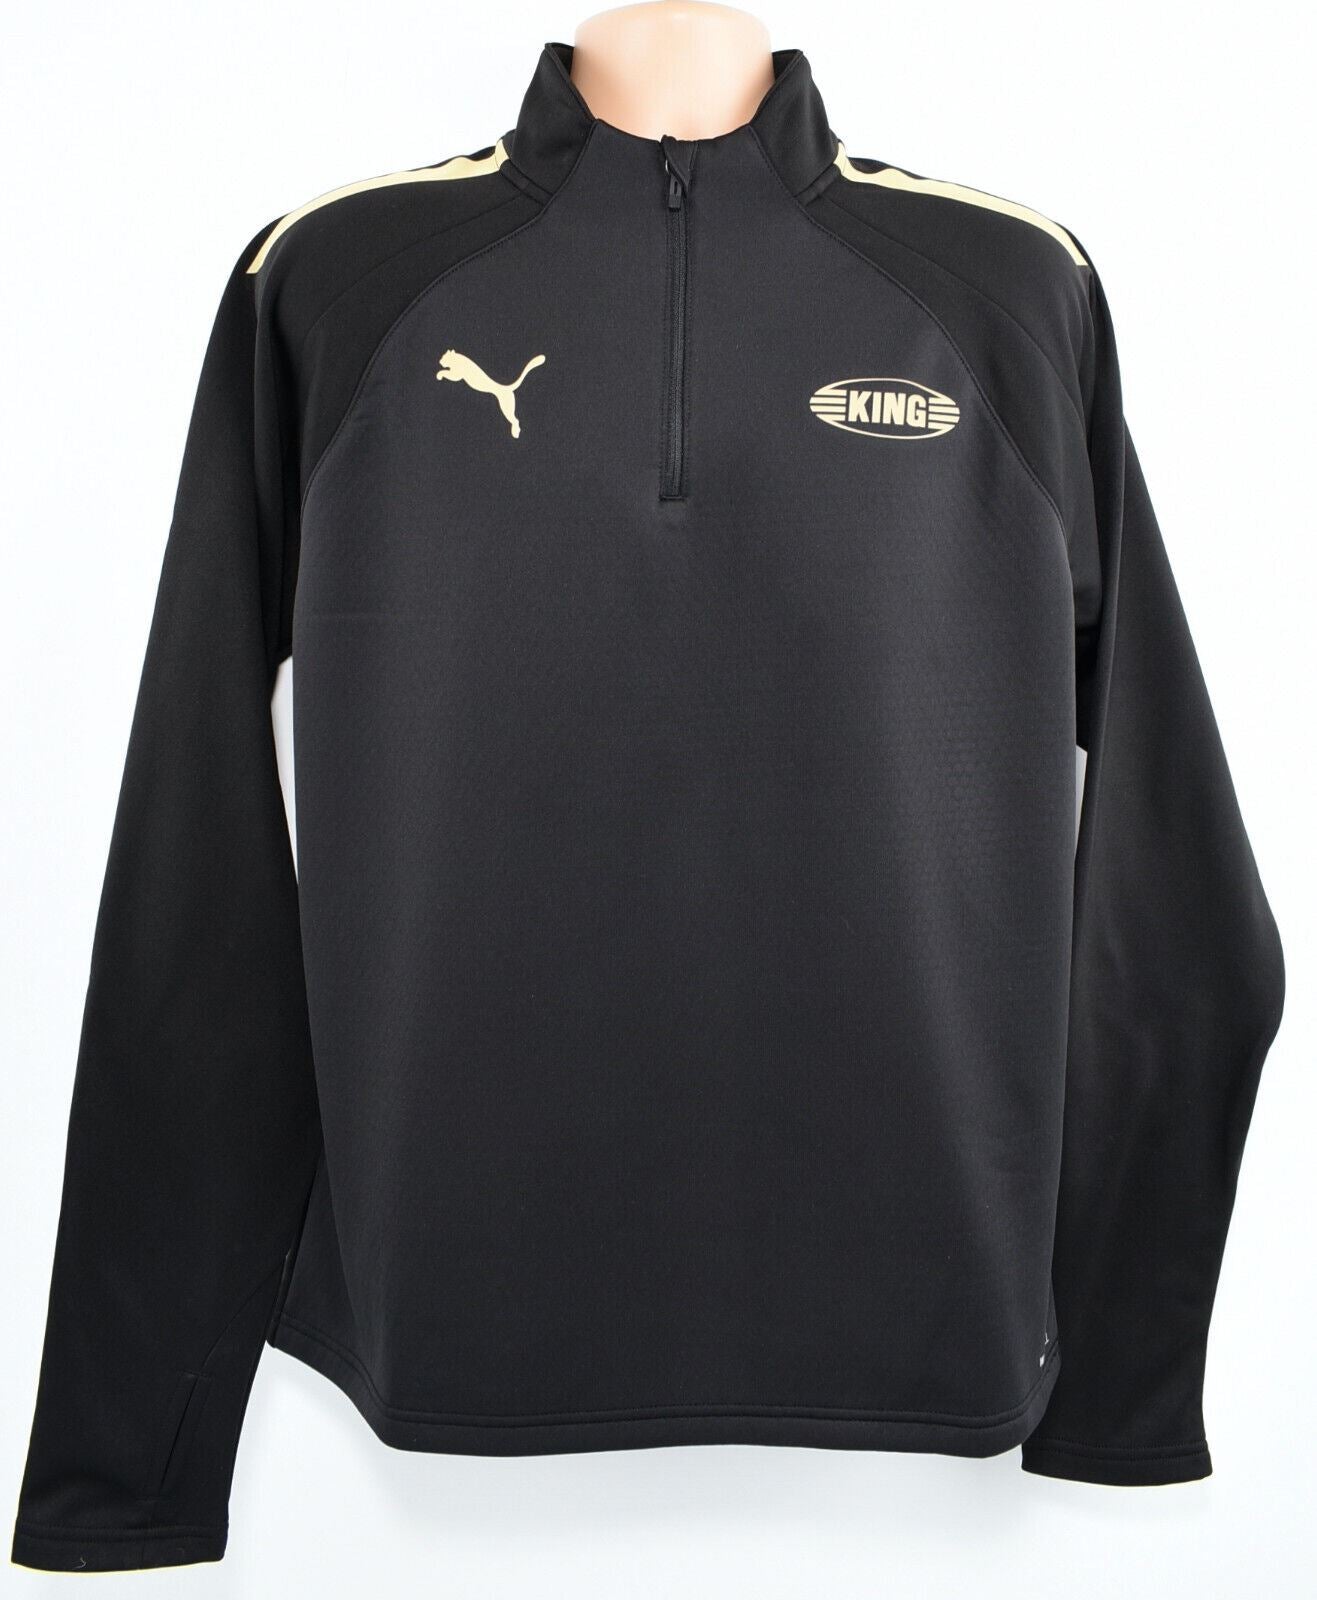 PUMA Men's KING WarmCell 1/2 Zip Sweatshirt, Black/Gold, size LARGE